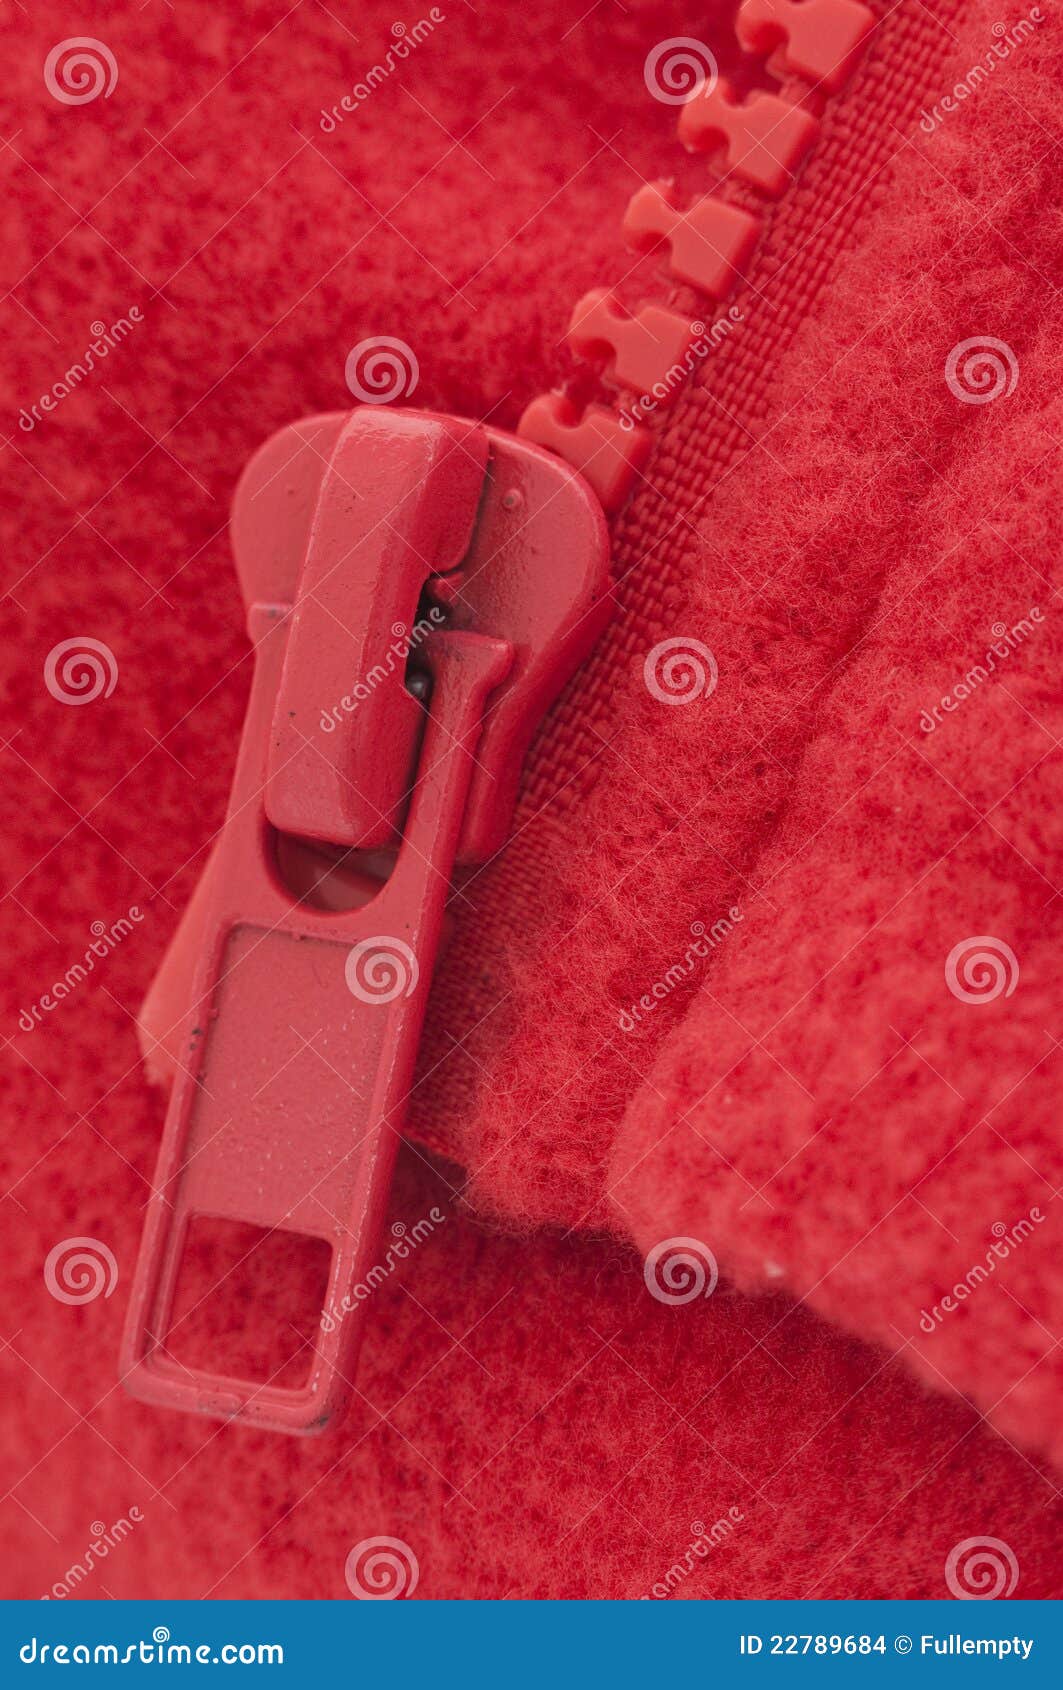 Red zipper stock photo. Image of orange, sweat, close - 22789684